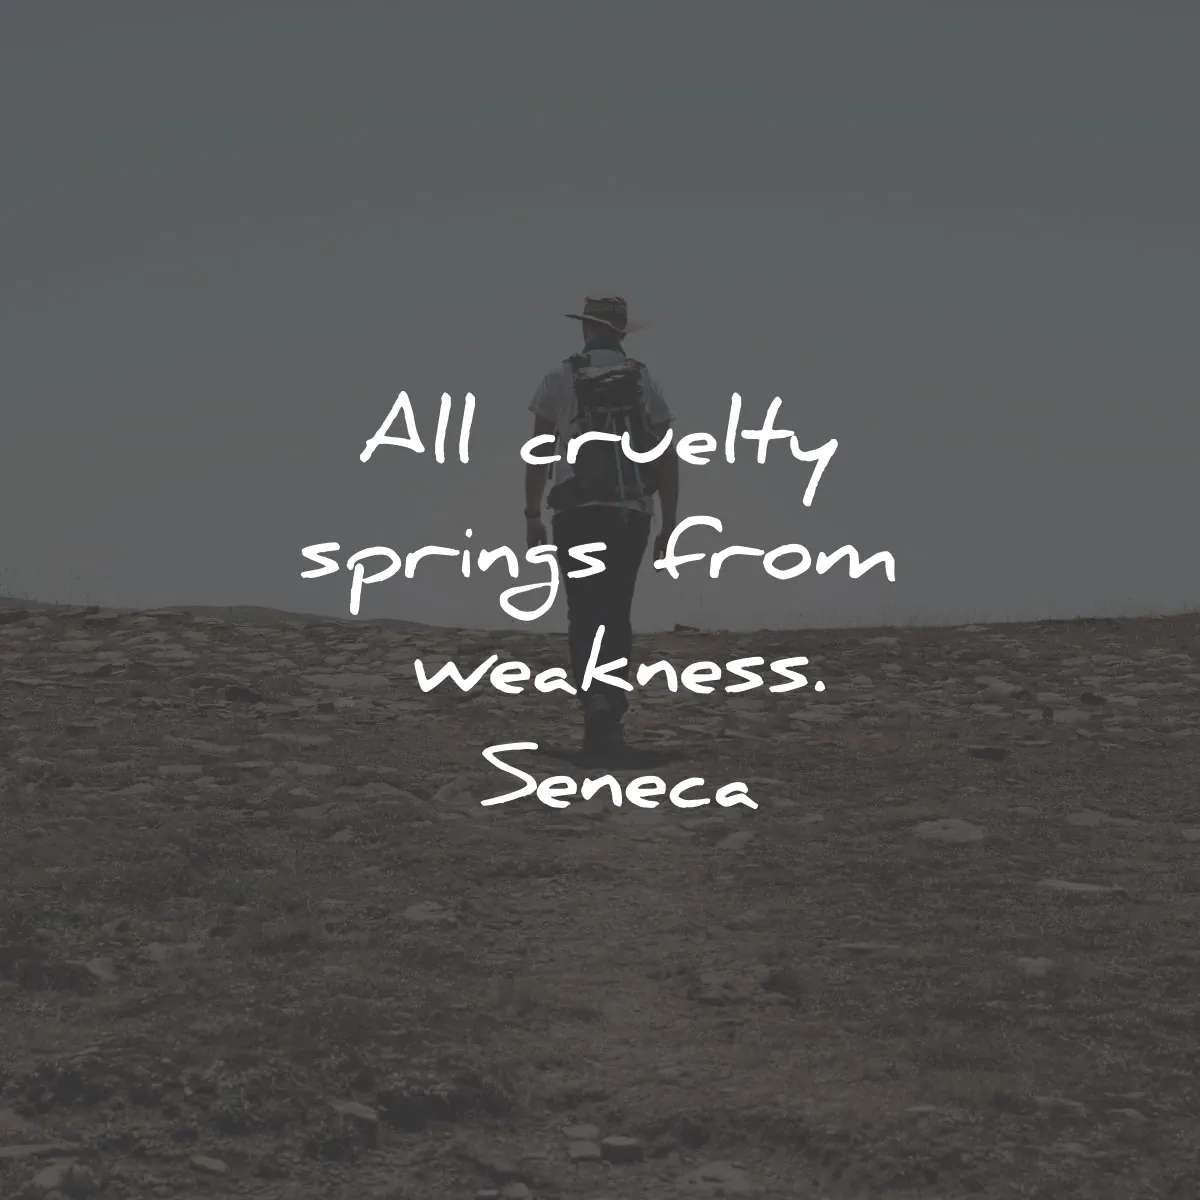 seneca quotes cruelty springs weakness wisdom